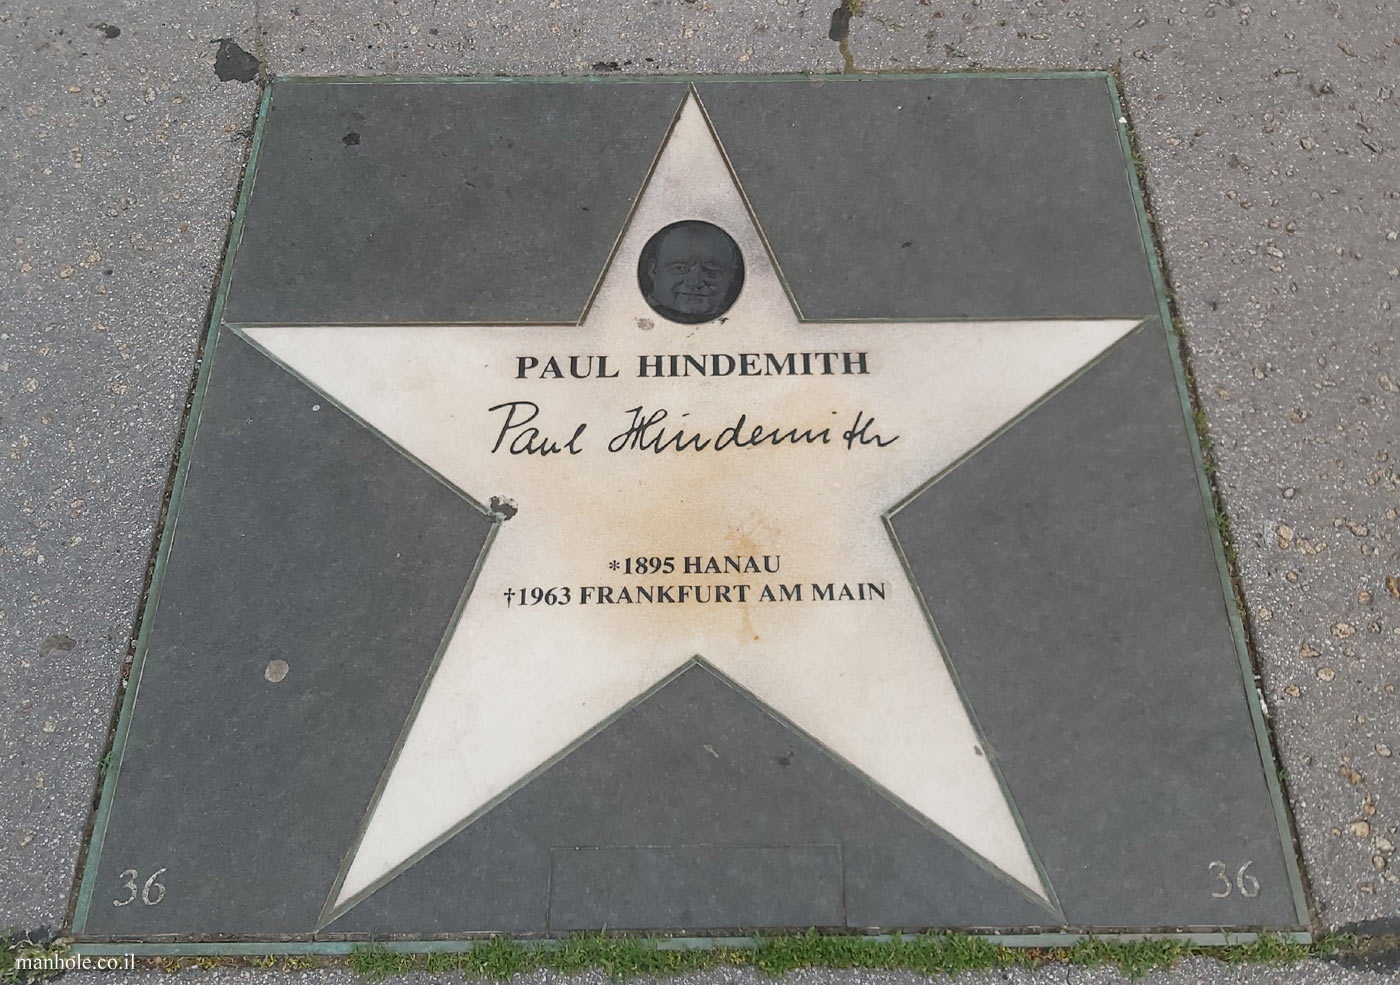 Vienna - Walk of Fame - Paul Hindemith